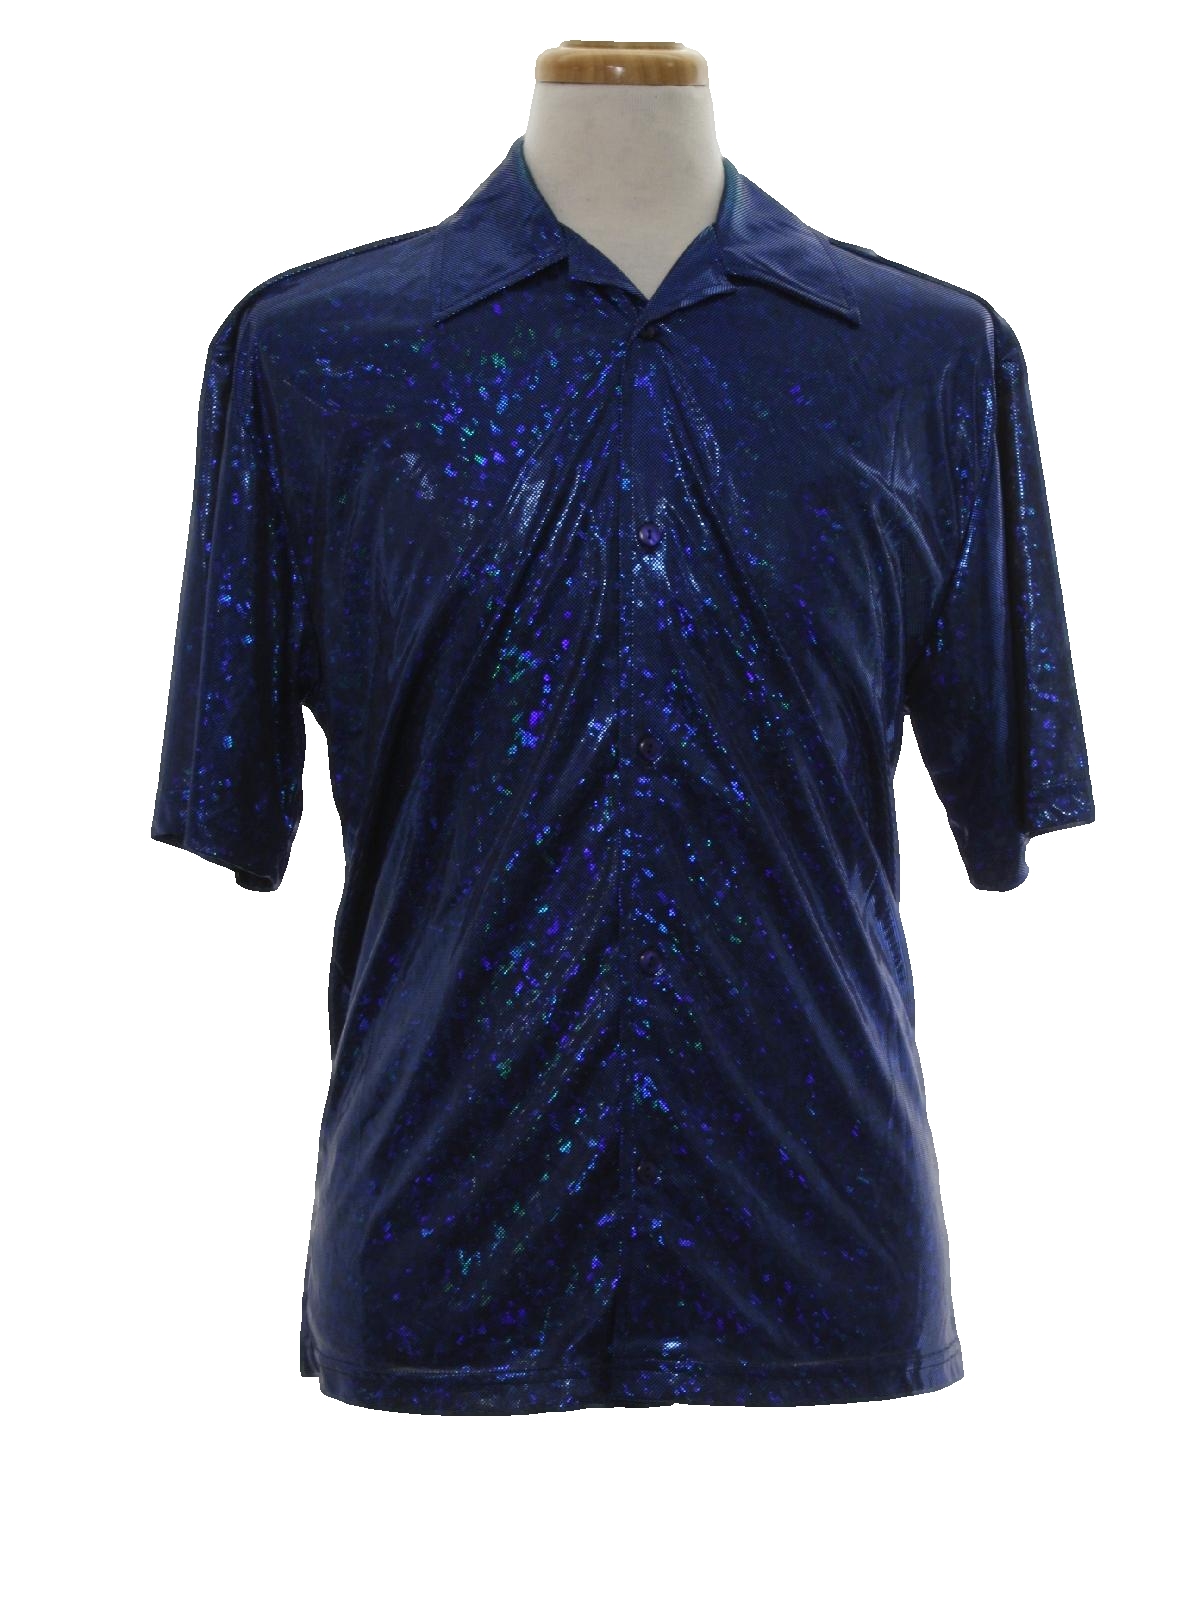 Retro 1990s Shirt: 90s -Pop Icon- Mens shimmery blue and black slinky ...